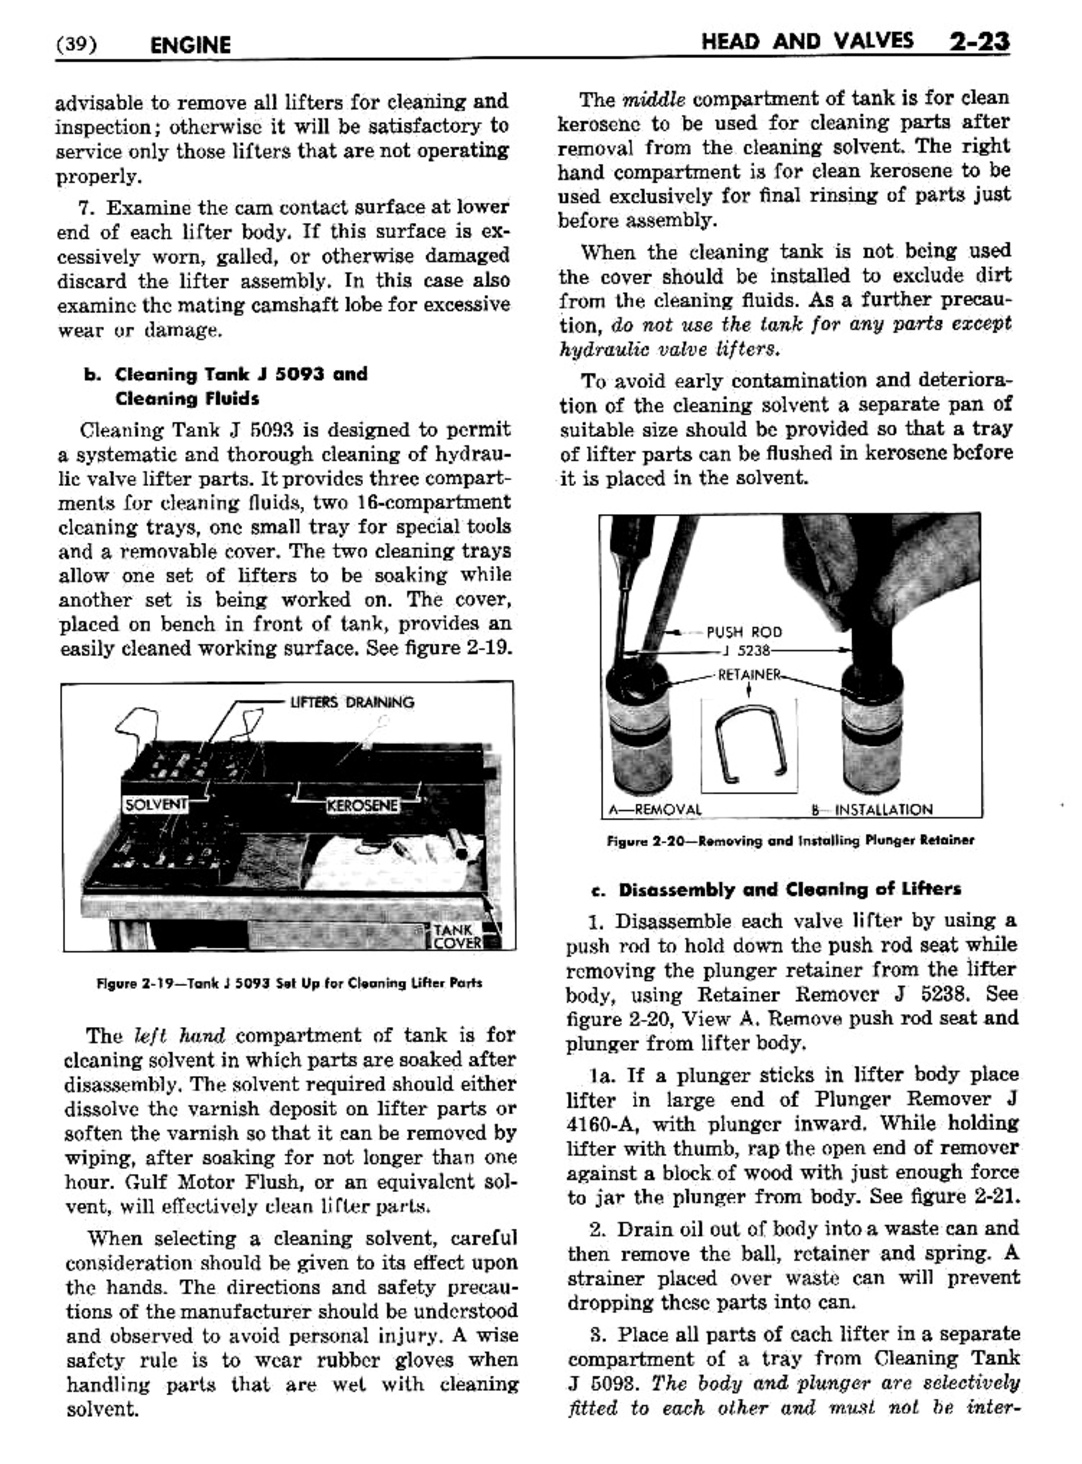 n_03 1954 Buick Shop Manual - Engine-023-023.jpg